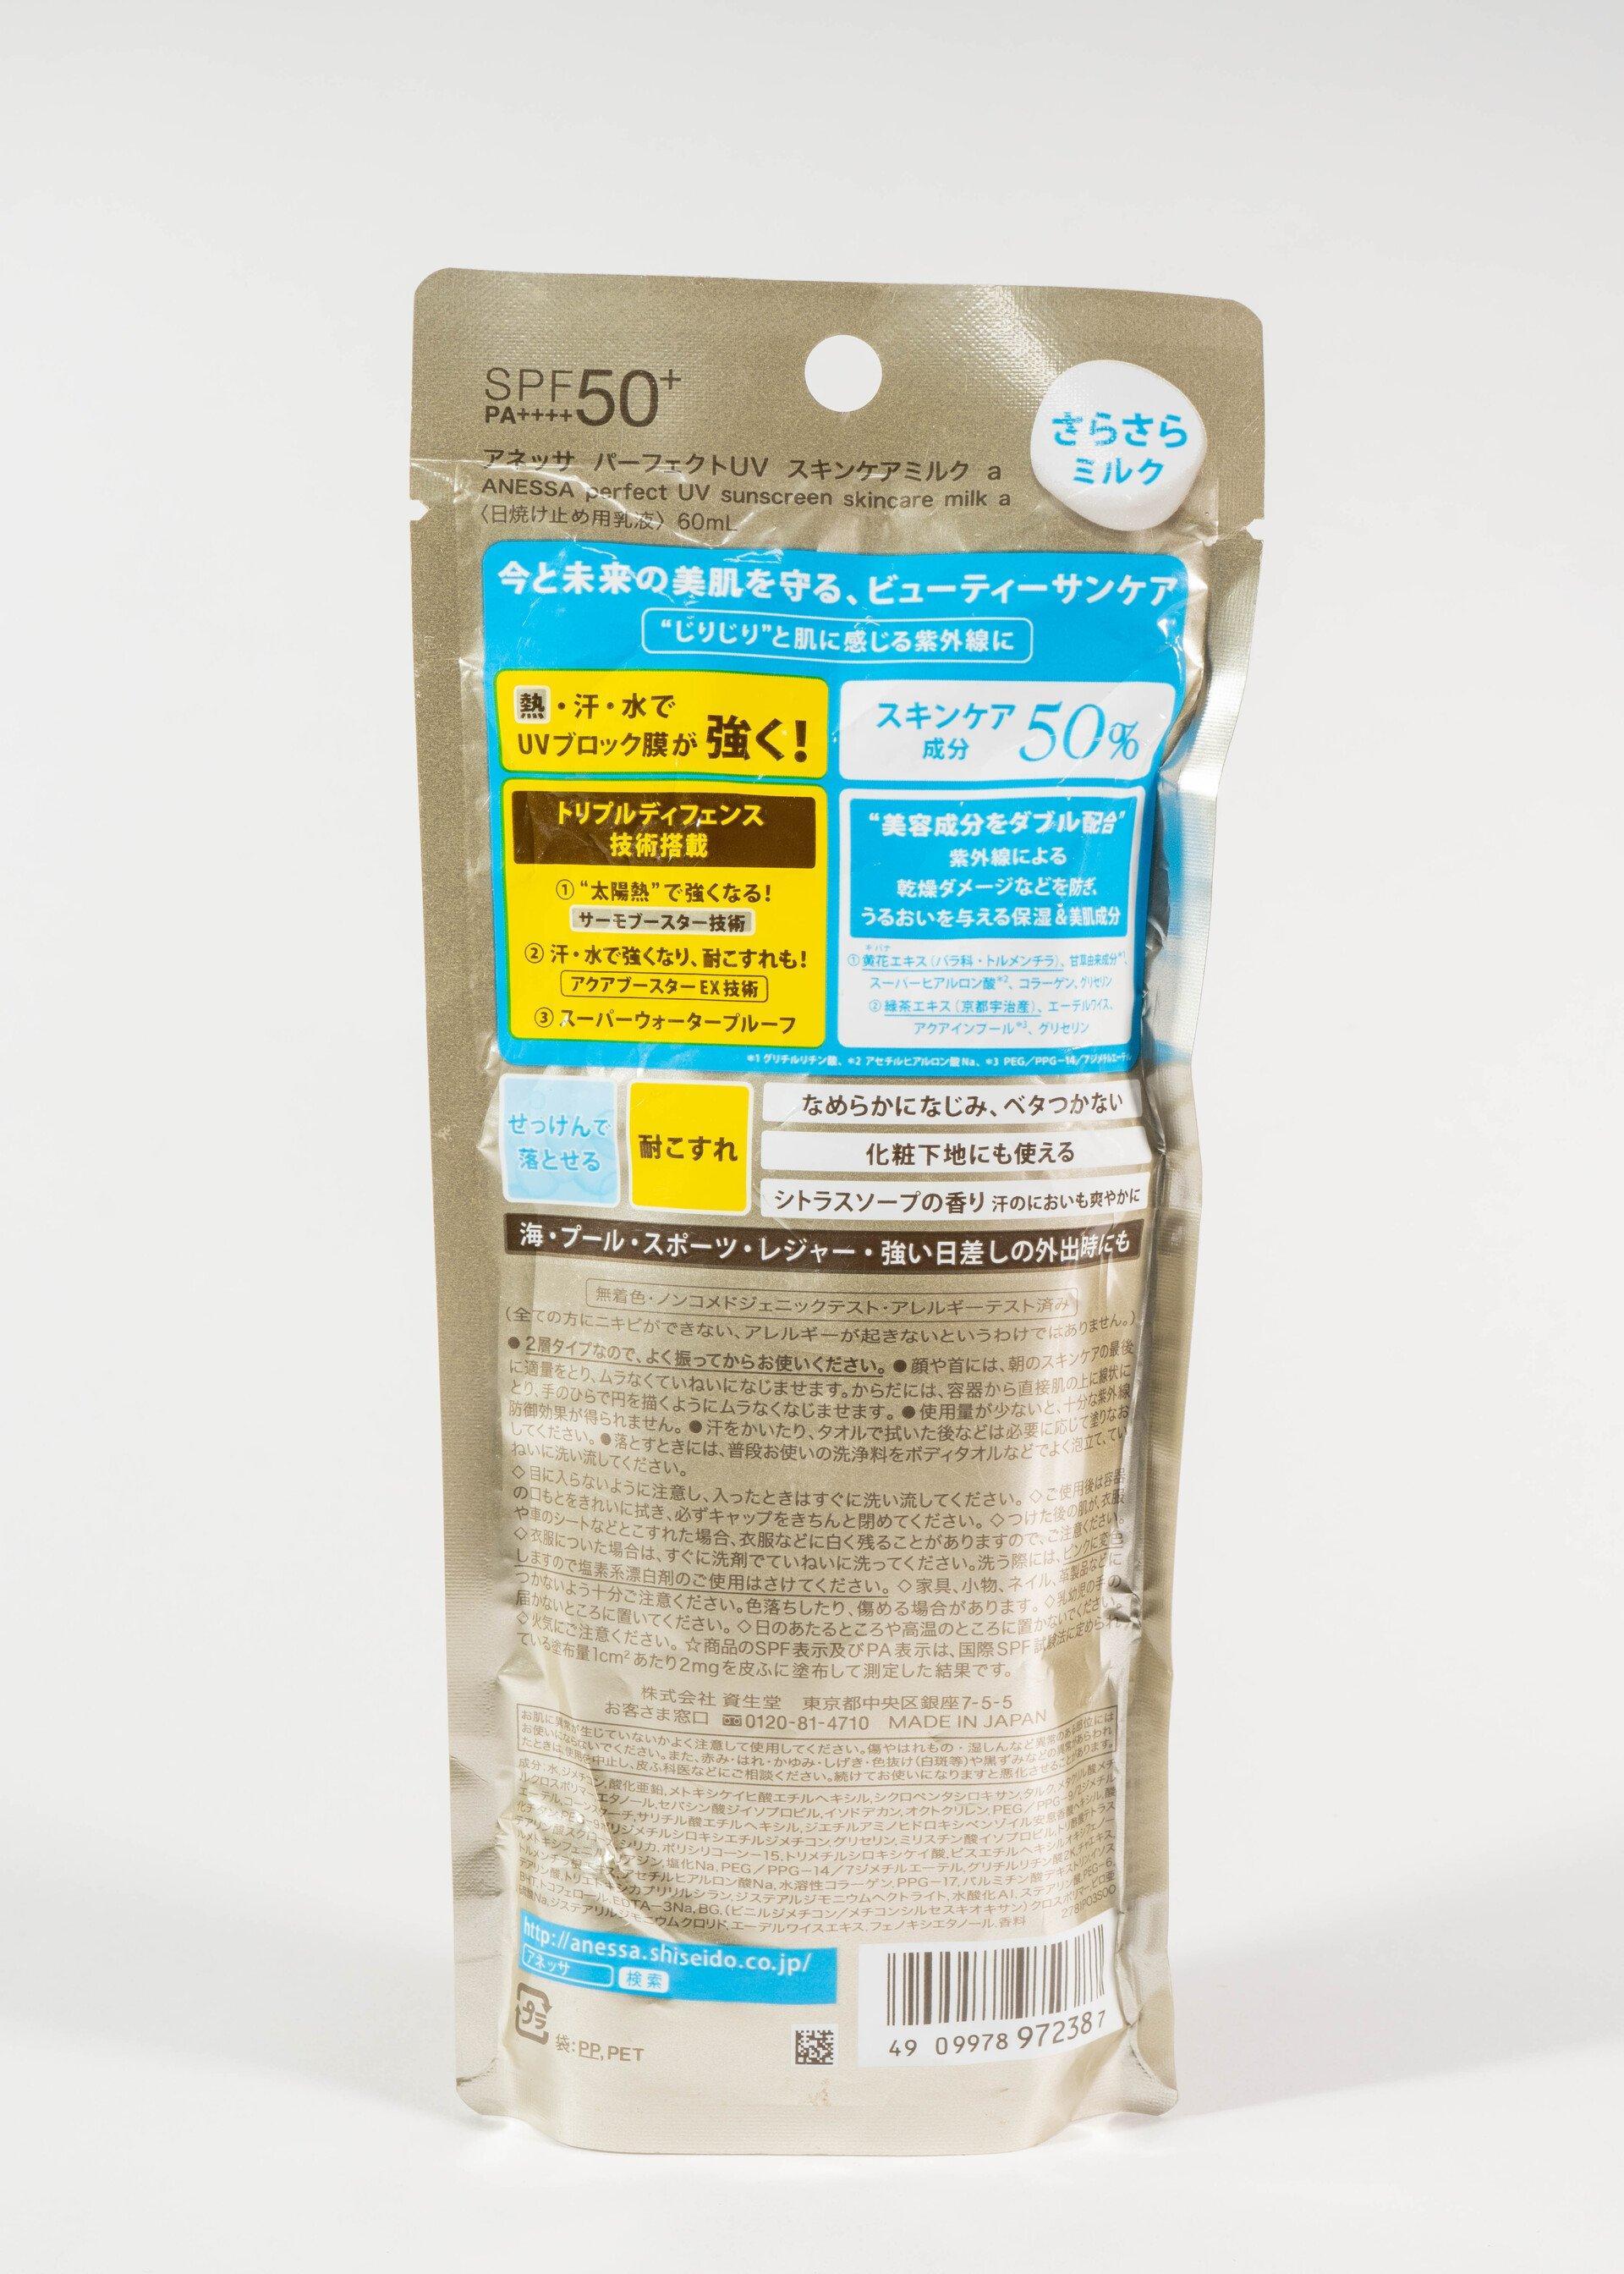 SHISEIDO Anessa Perfect Uv Sunscreen Skincare Milk Spf50+/Pa++++ 60ml